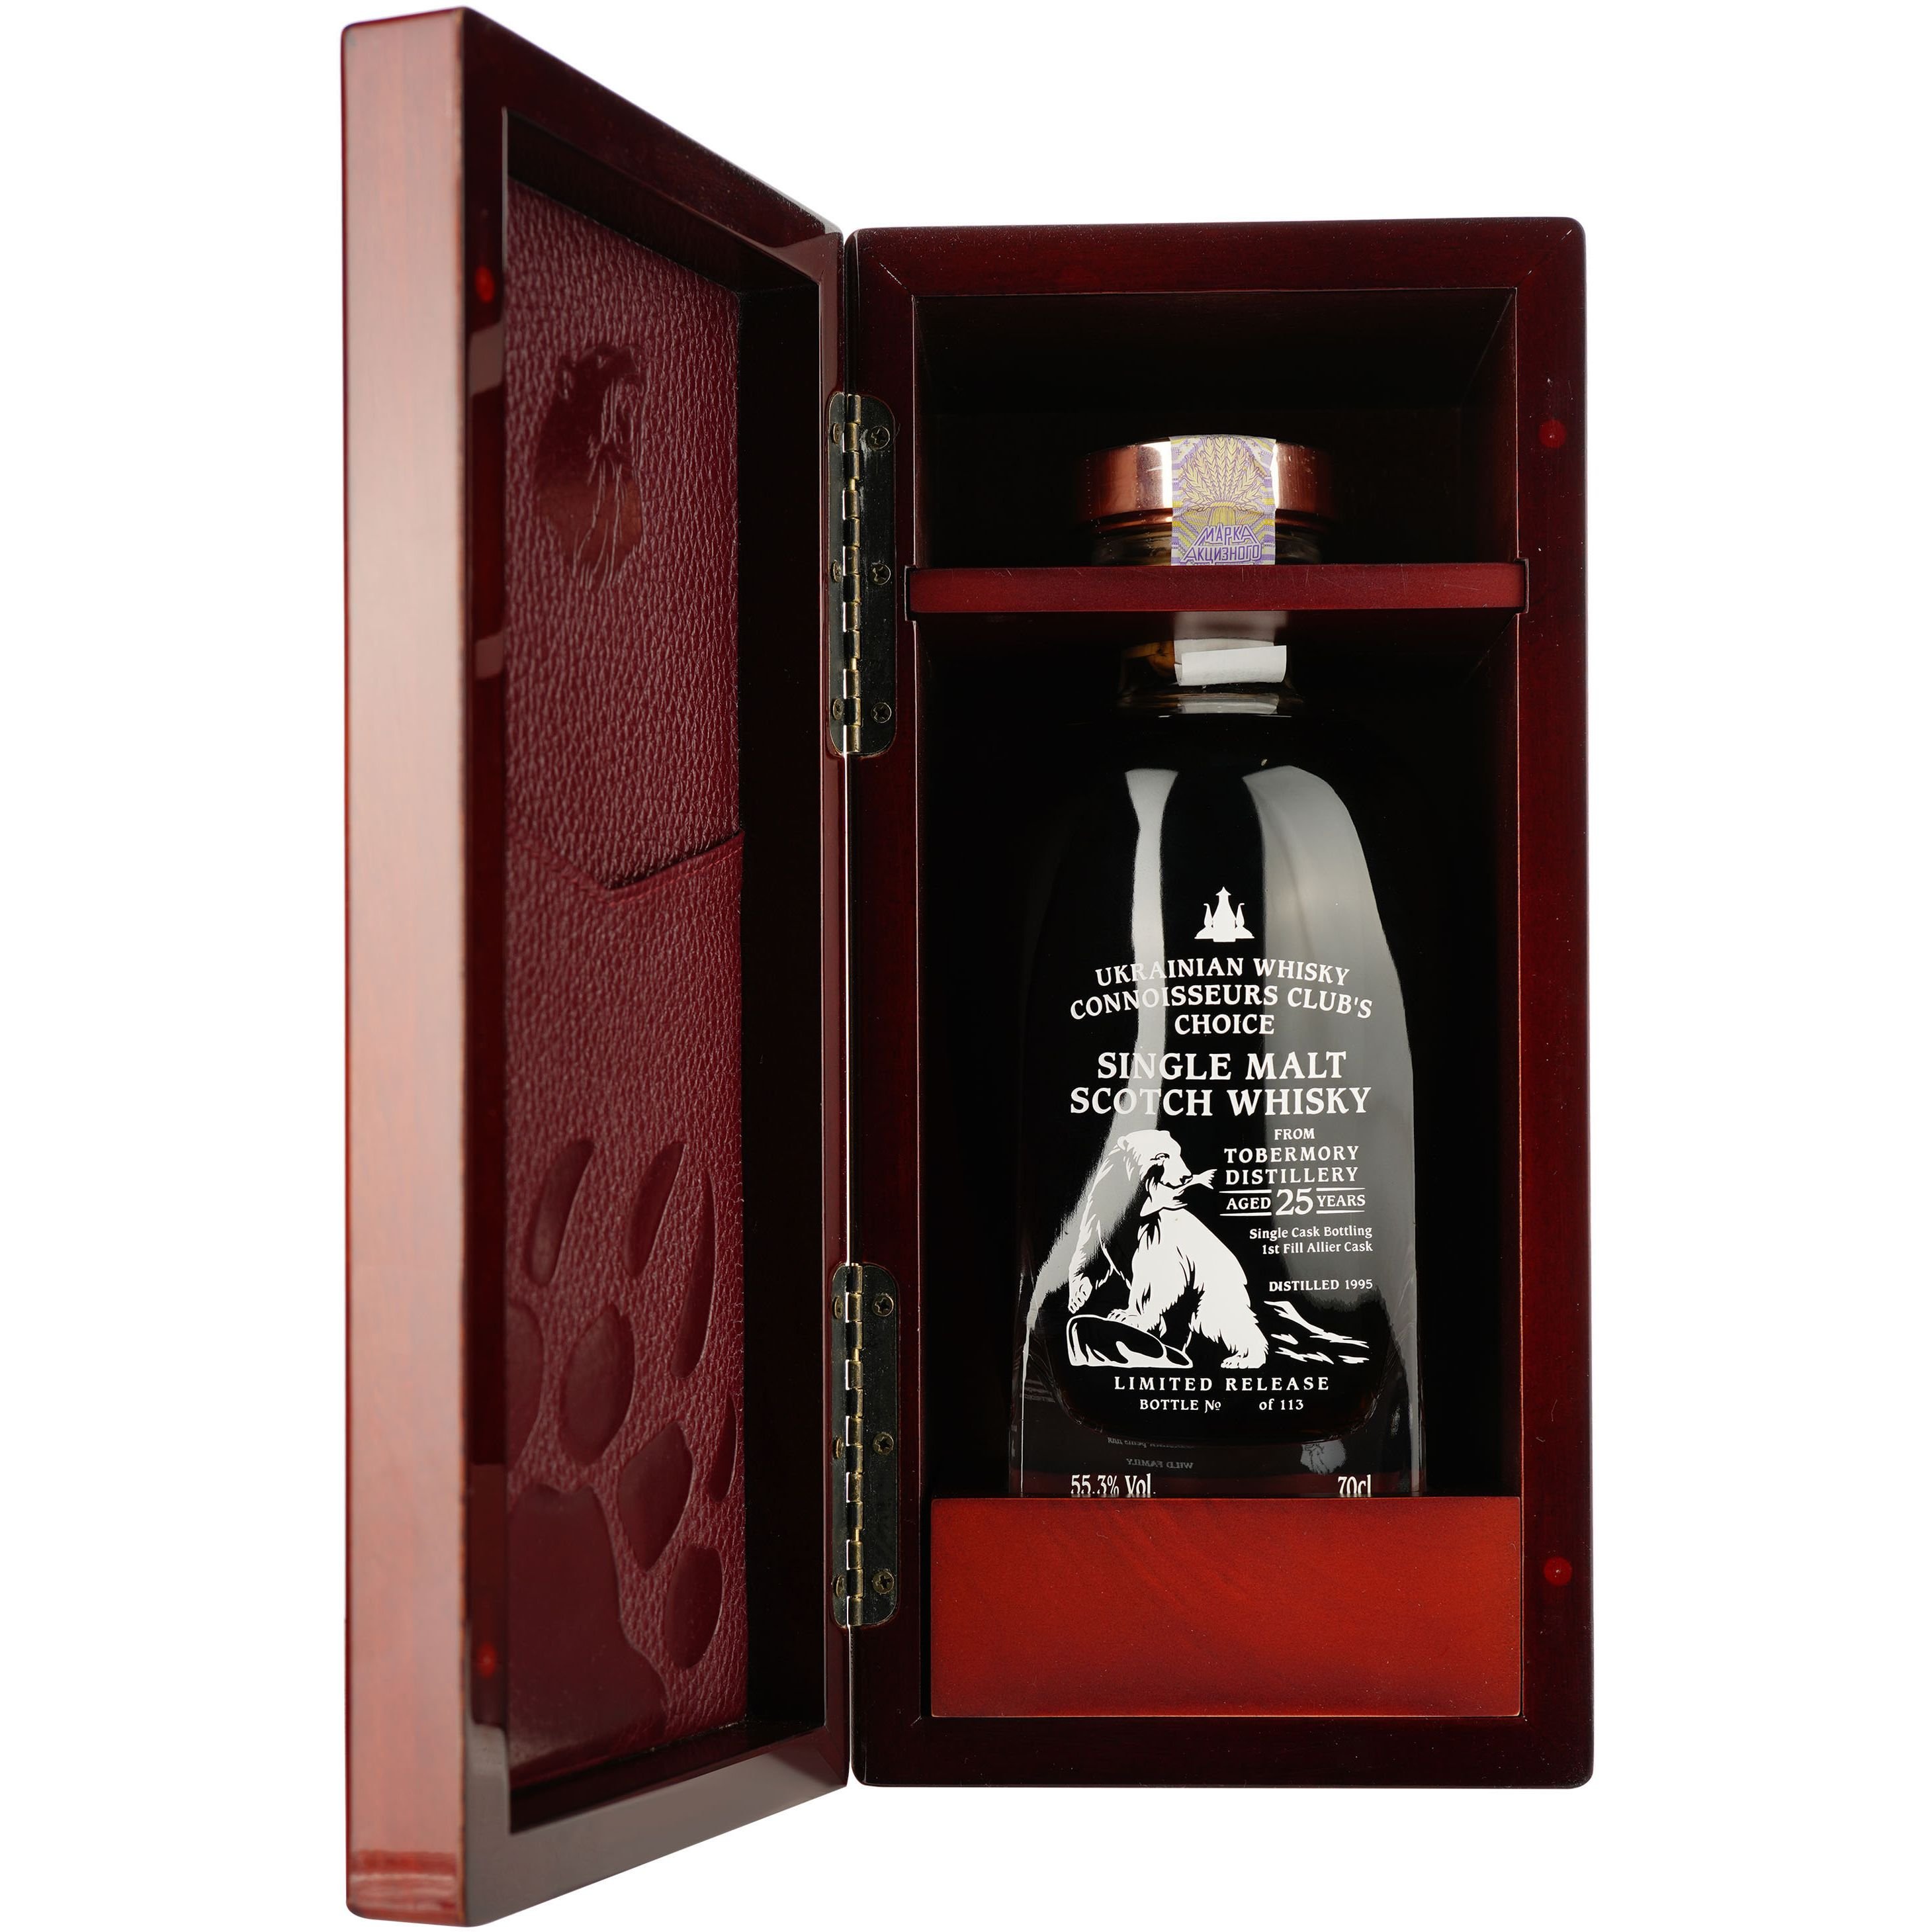 Виски Tobermory 25 Years Old 1st Fill Allier Single Malt Scotch Whisky 55.3% 0.7 л в подарочной упаковке - фото 4